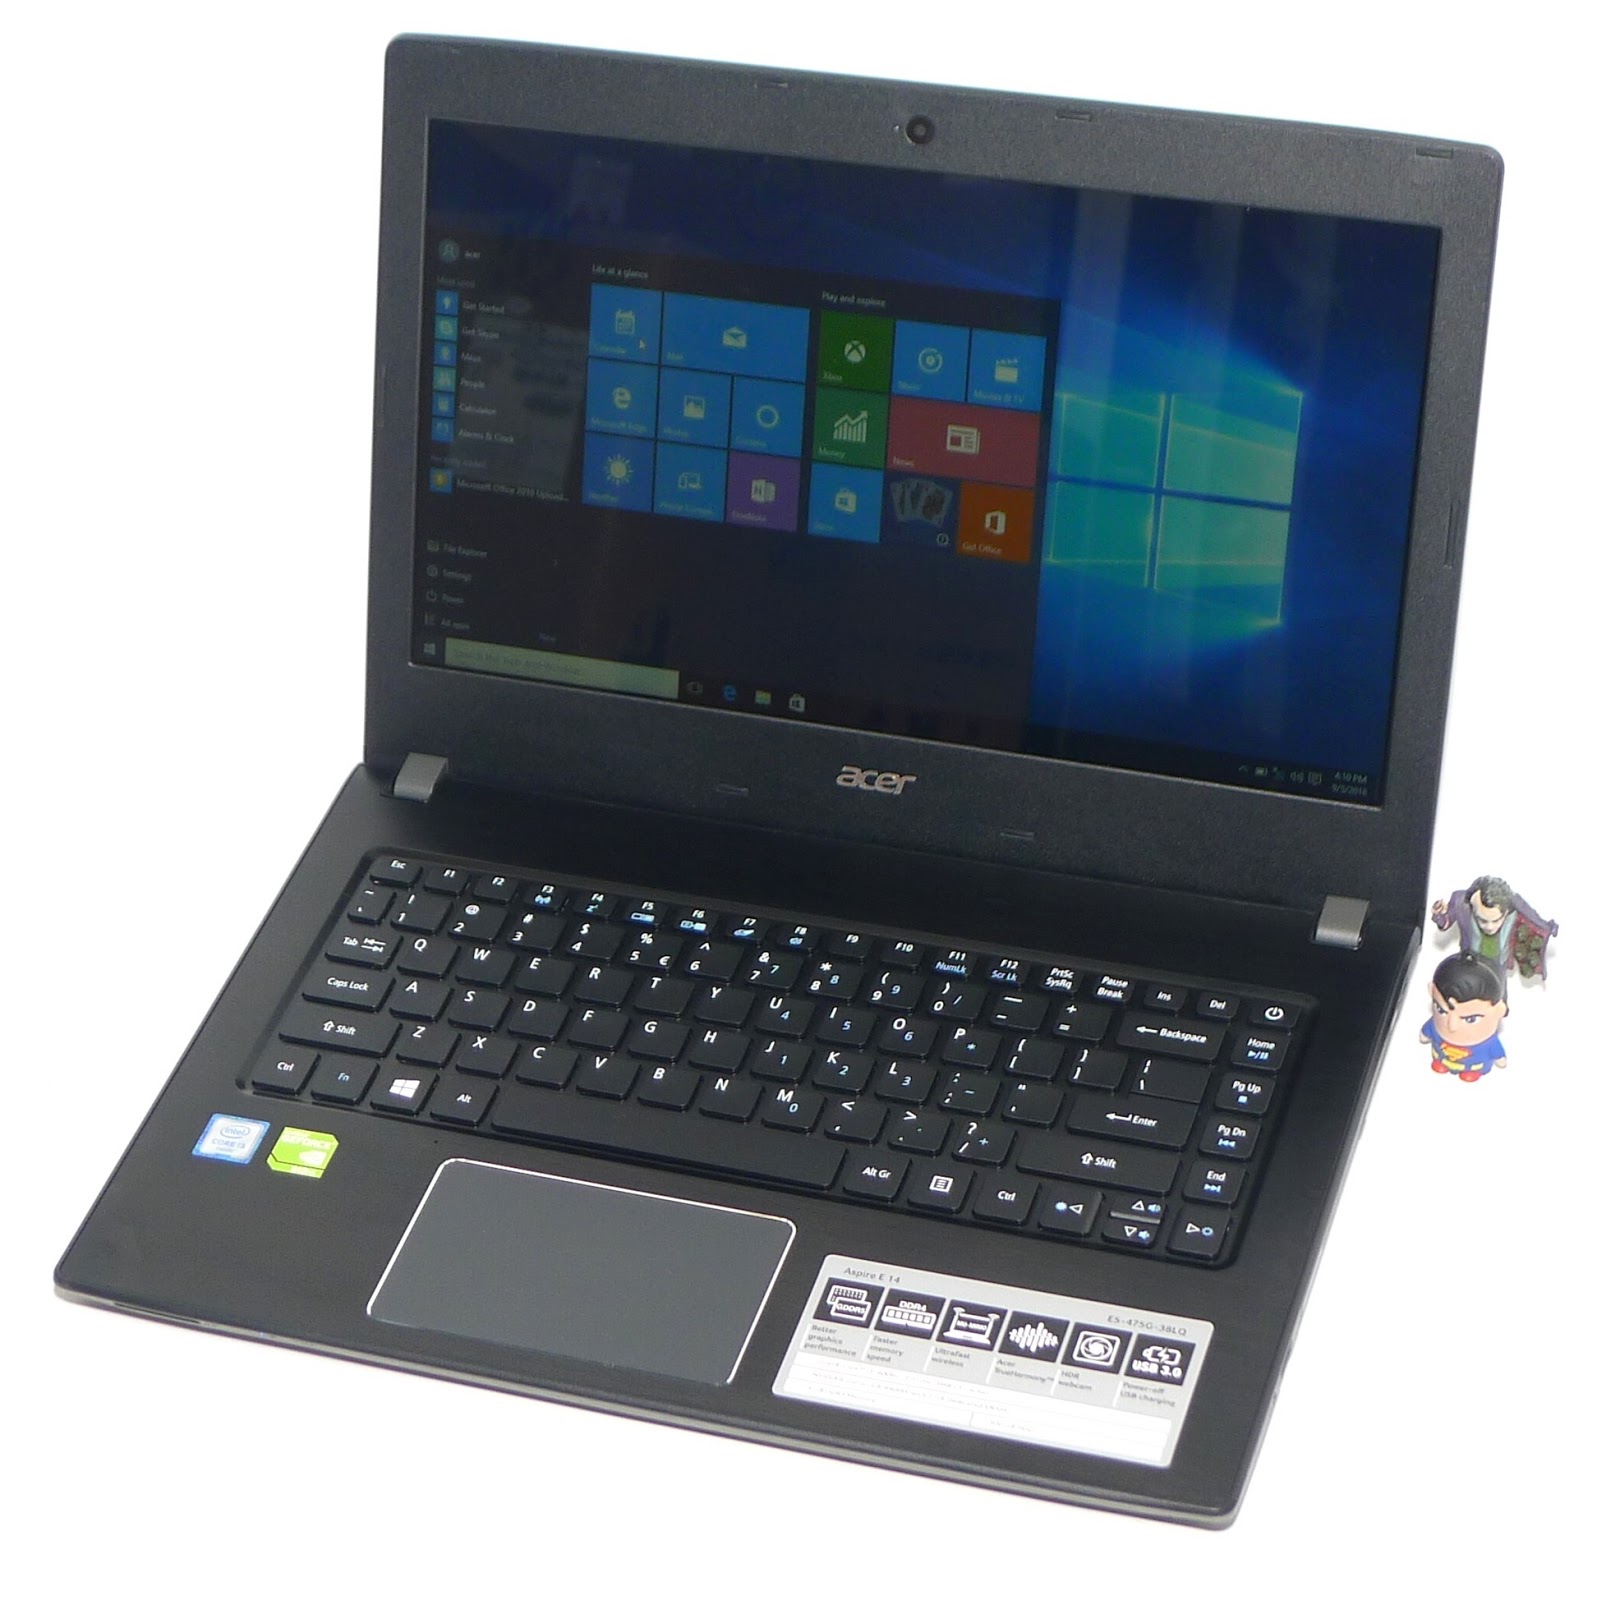 Berita ttg Harga Laptop Acer Aspire Es 14 Viral